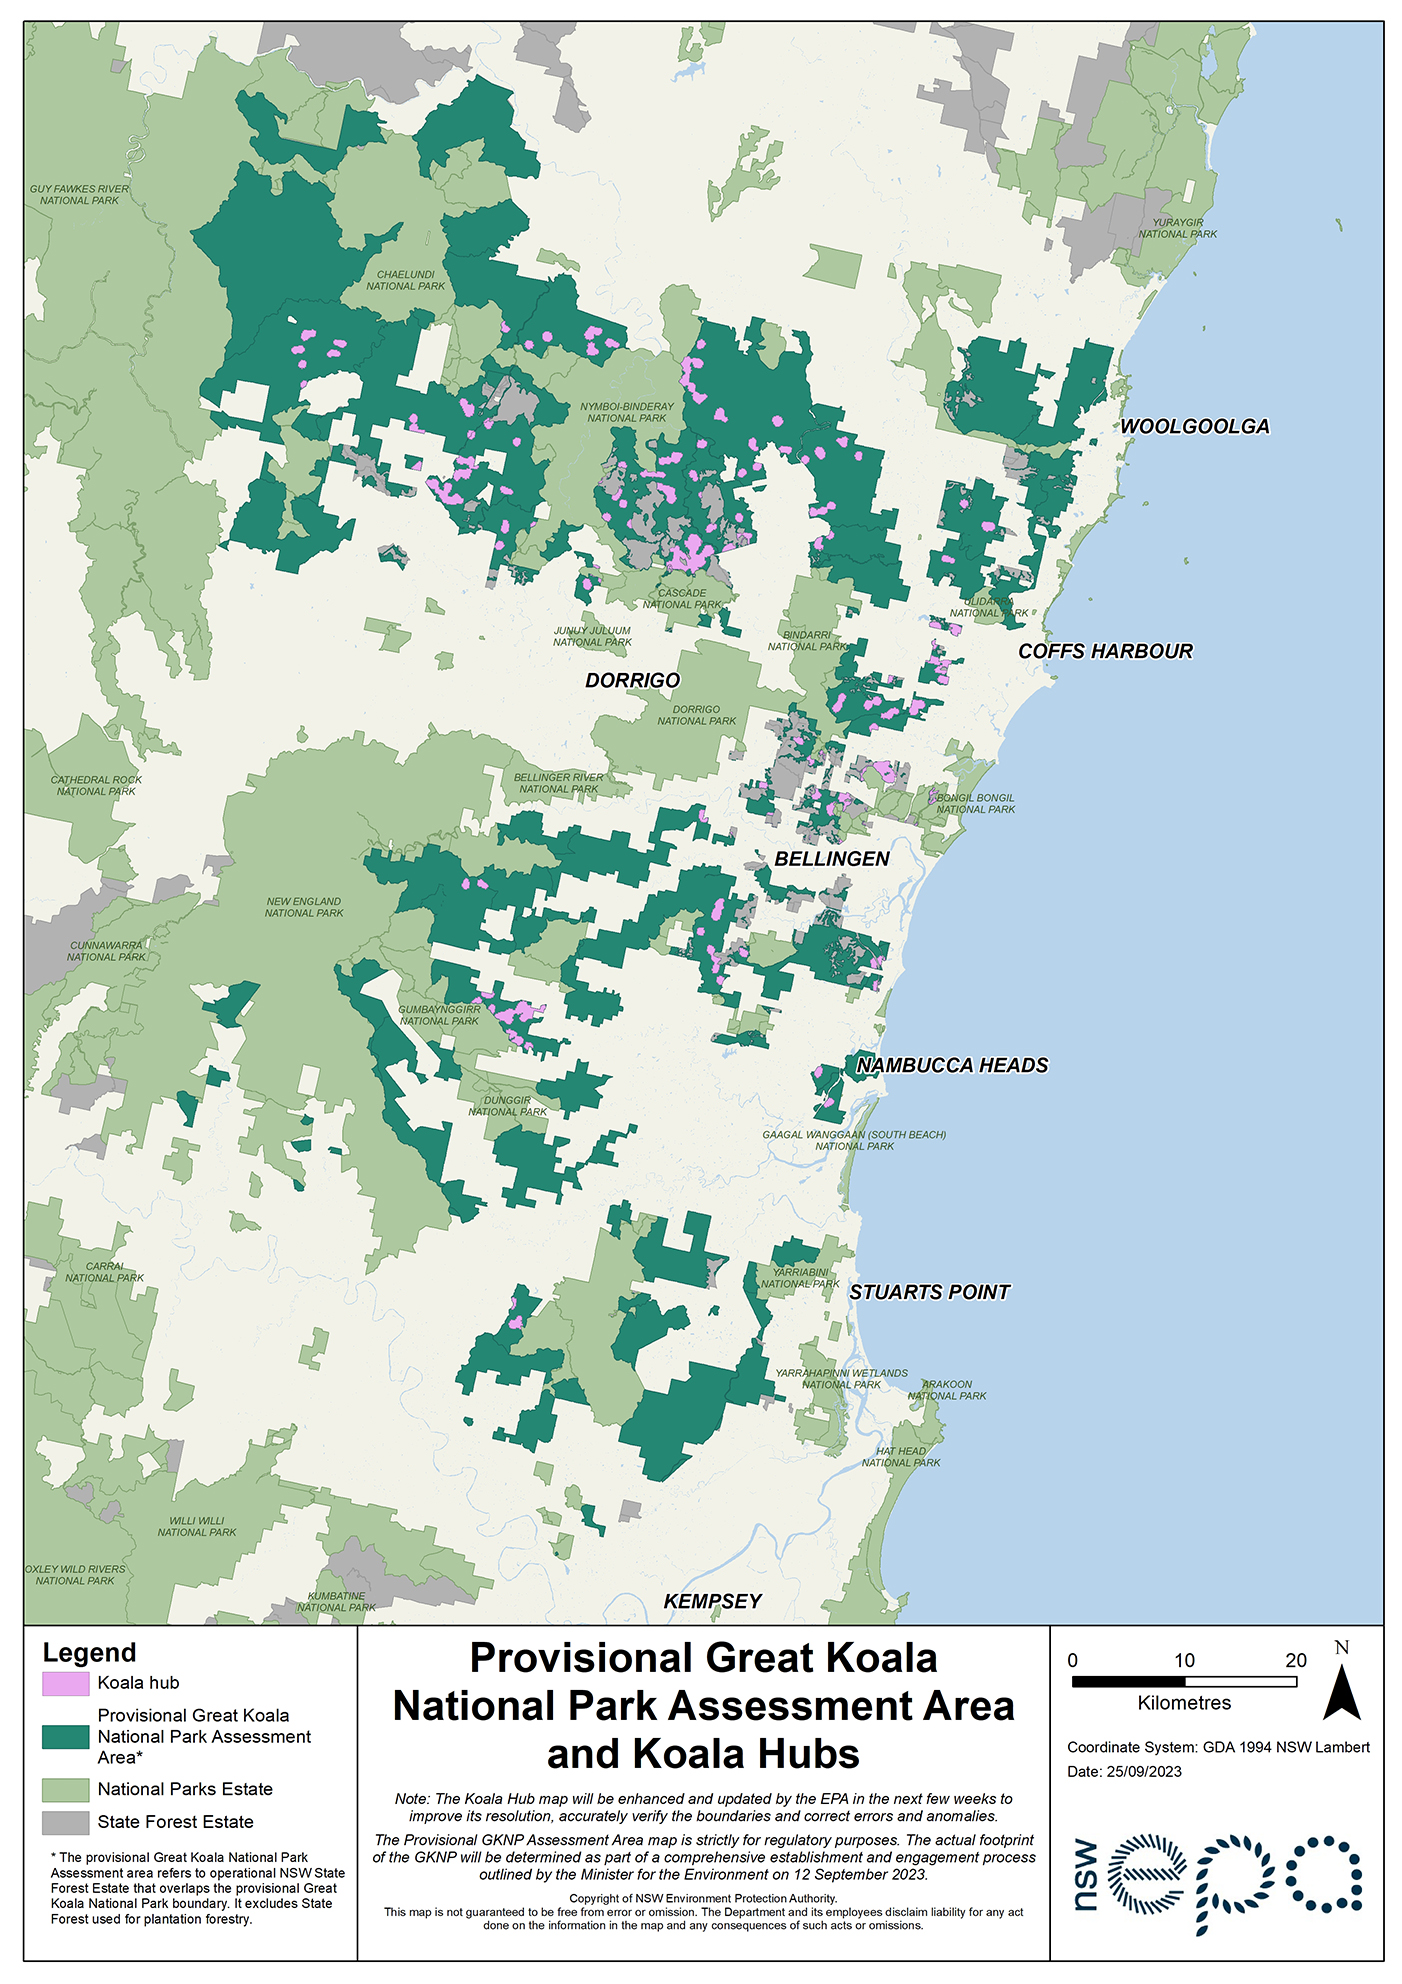 Map showing Provisional Great Koala National Park Assessment Area and Koala Hubs